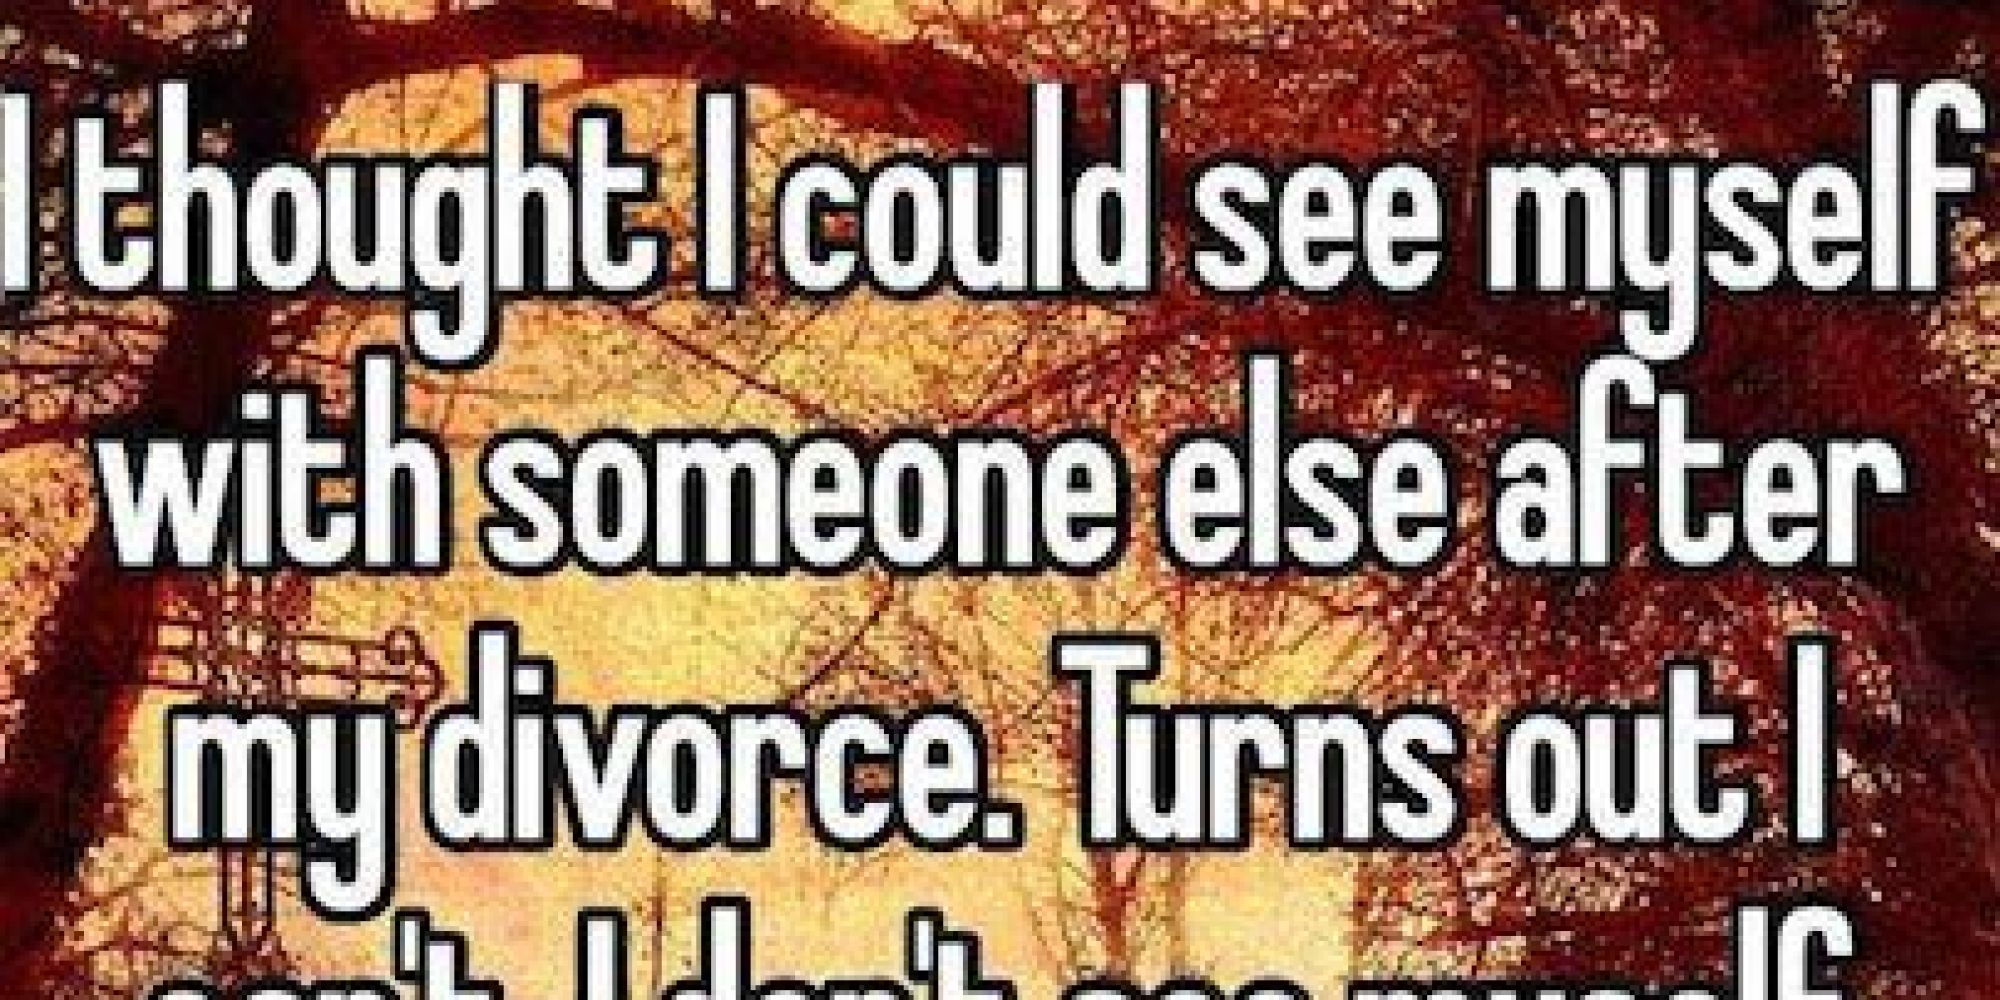 Quotes marriage after divorce Divorced Men